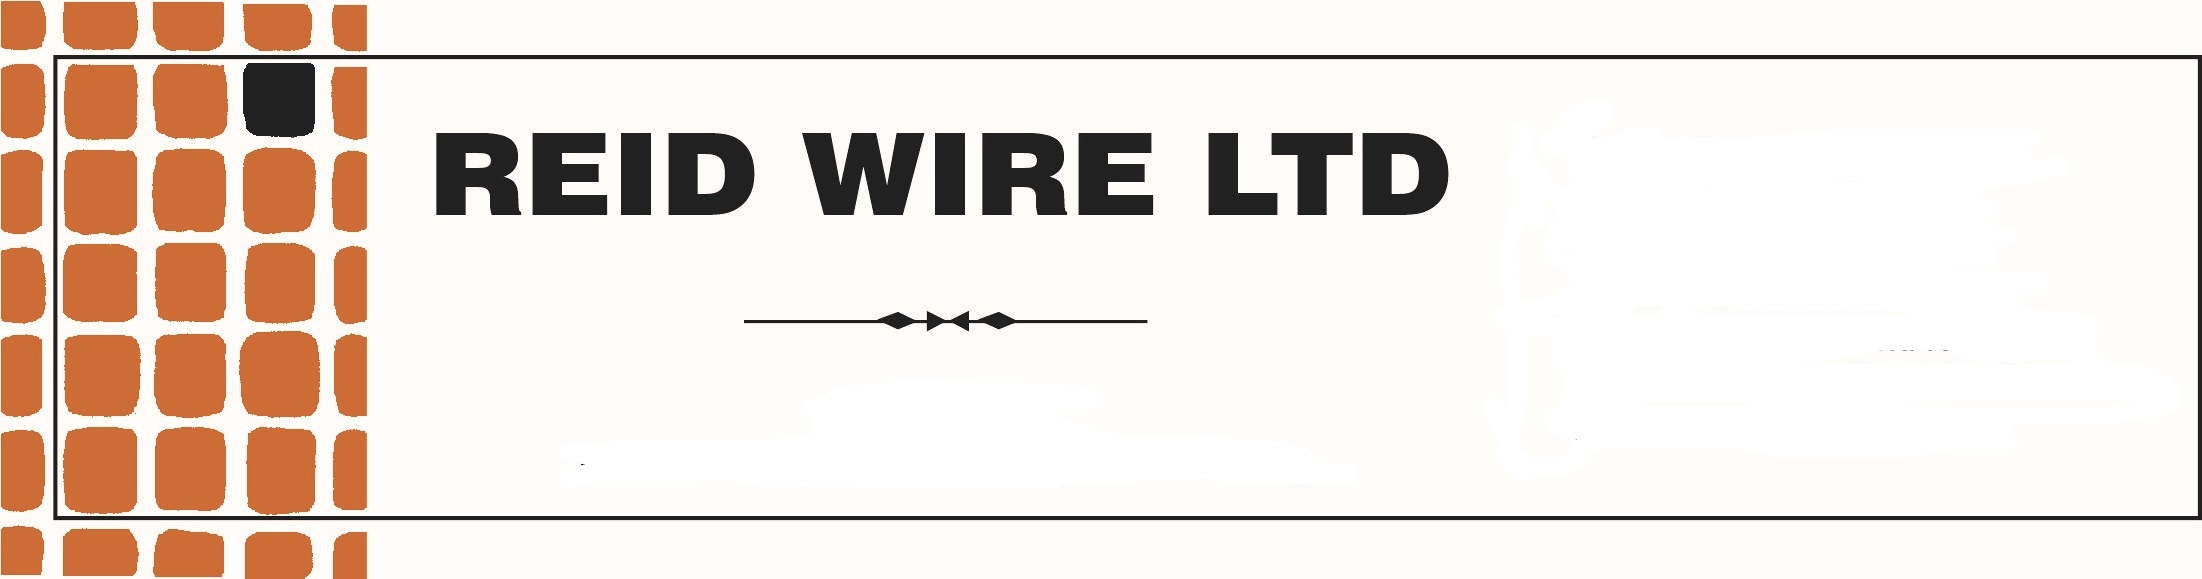 William Reid & Sons (Wireworkers) Ltd